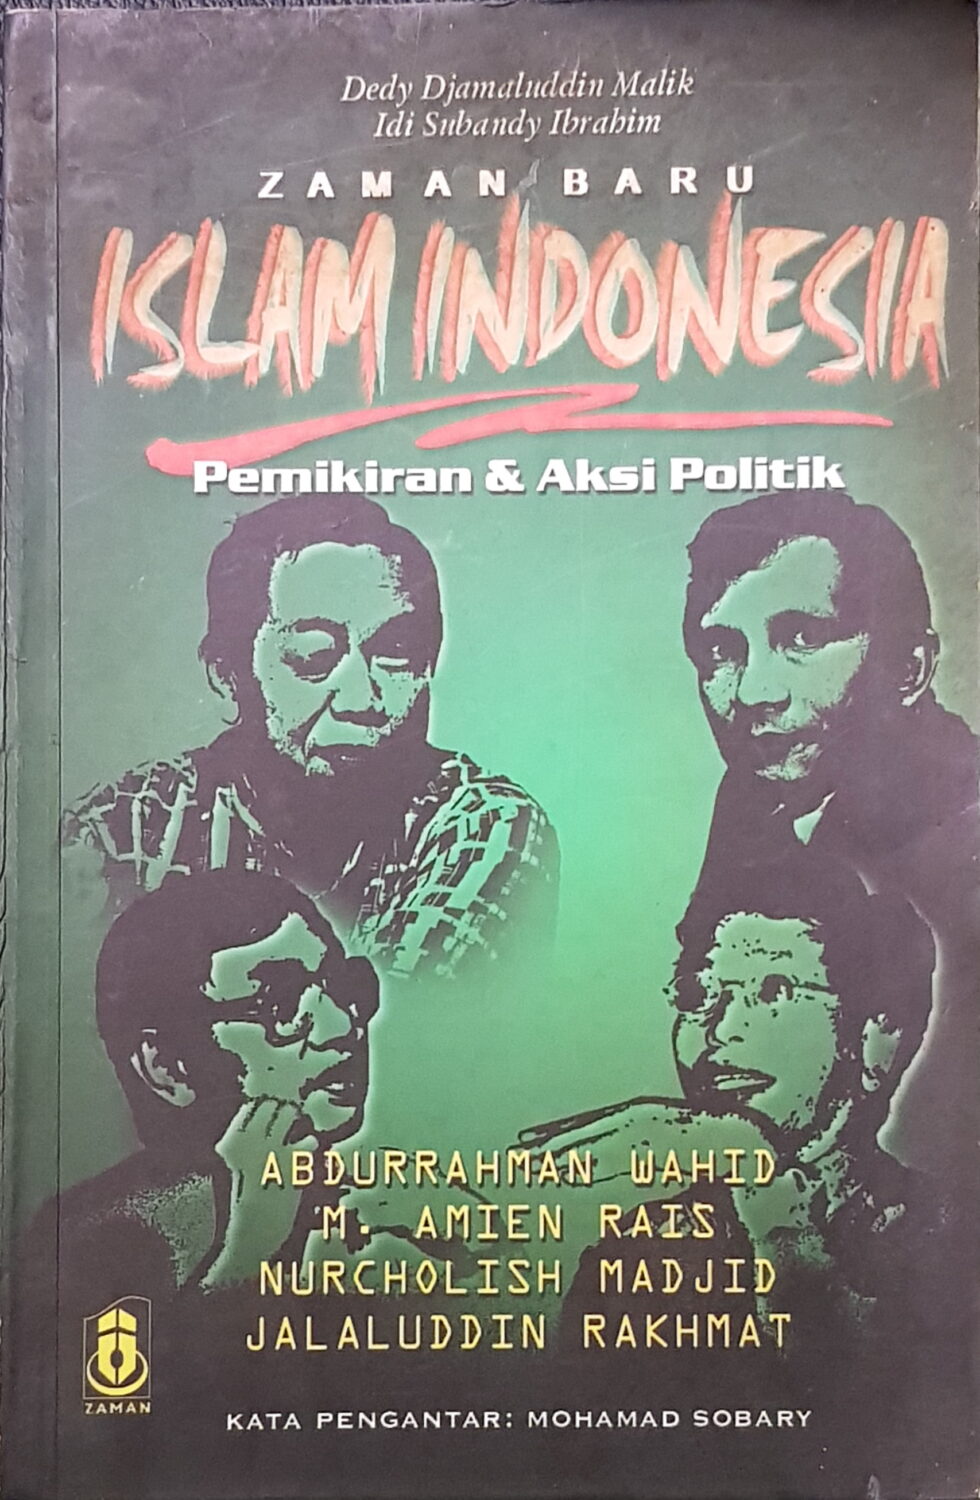 Zaman Baru Islam Indonesia (cover 2)